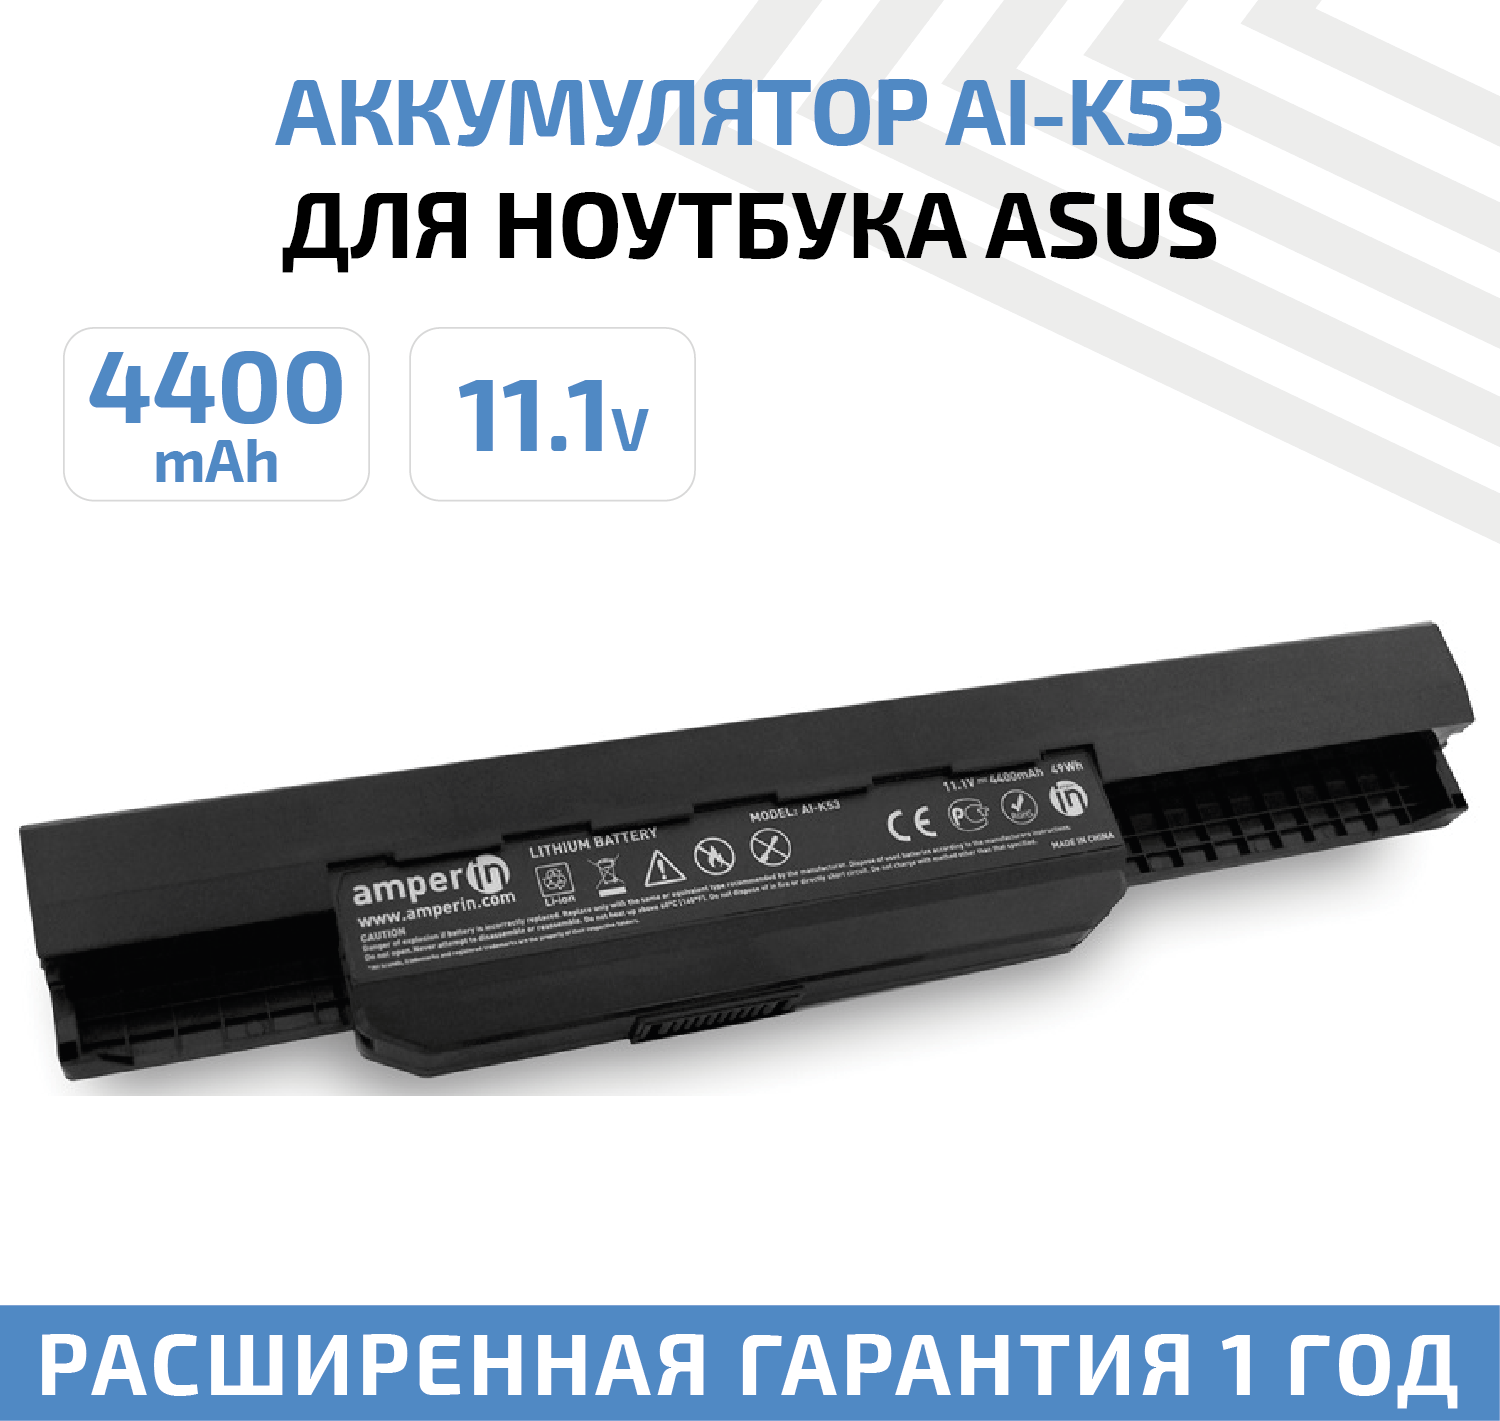 Аккумулятор (АКБ, аккумуляторная батарея) Amperin AI-K53 для ноутбука Asus K53 (A32-K53), 11.1В, 4400мАч, 49Вт, черный